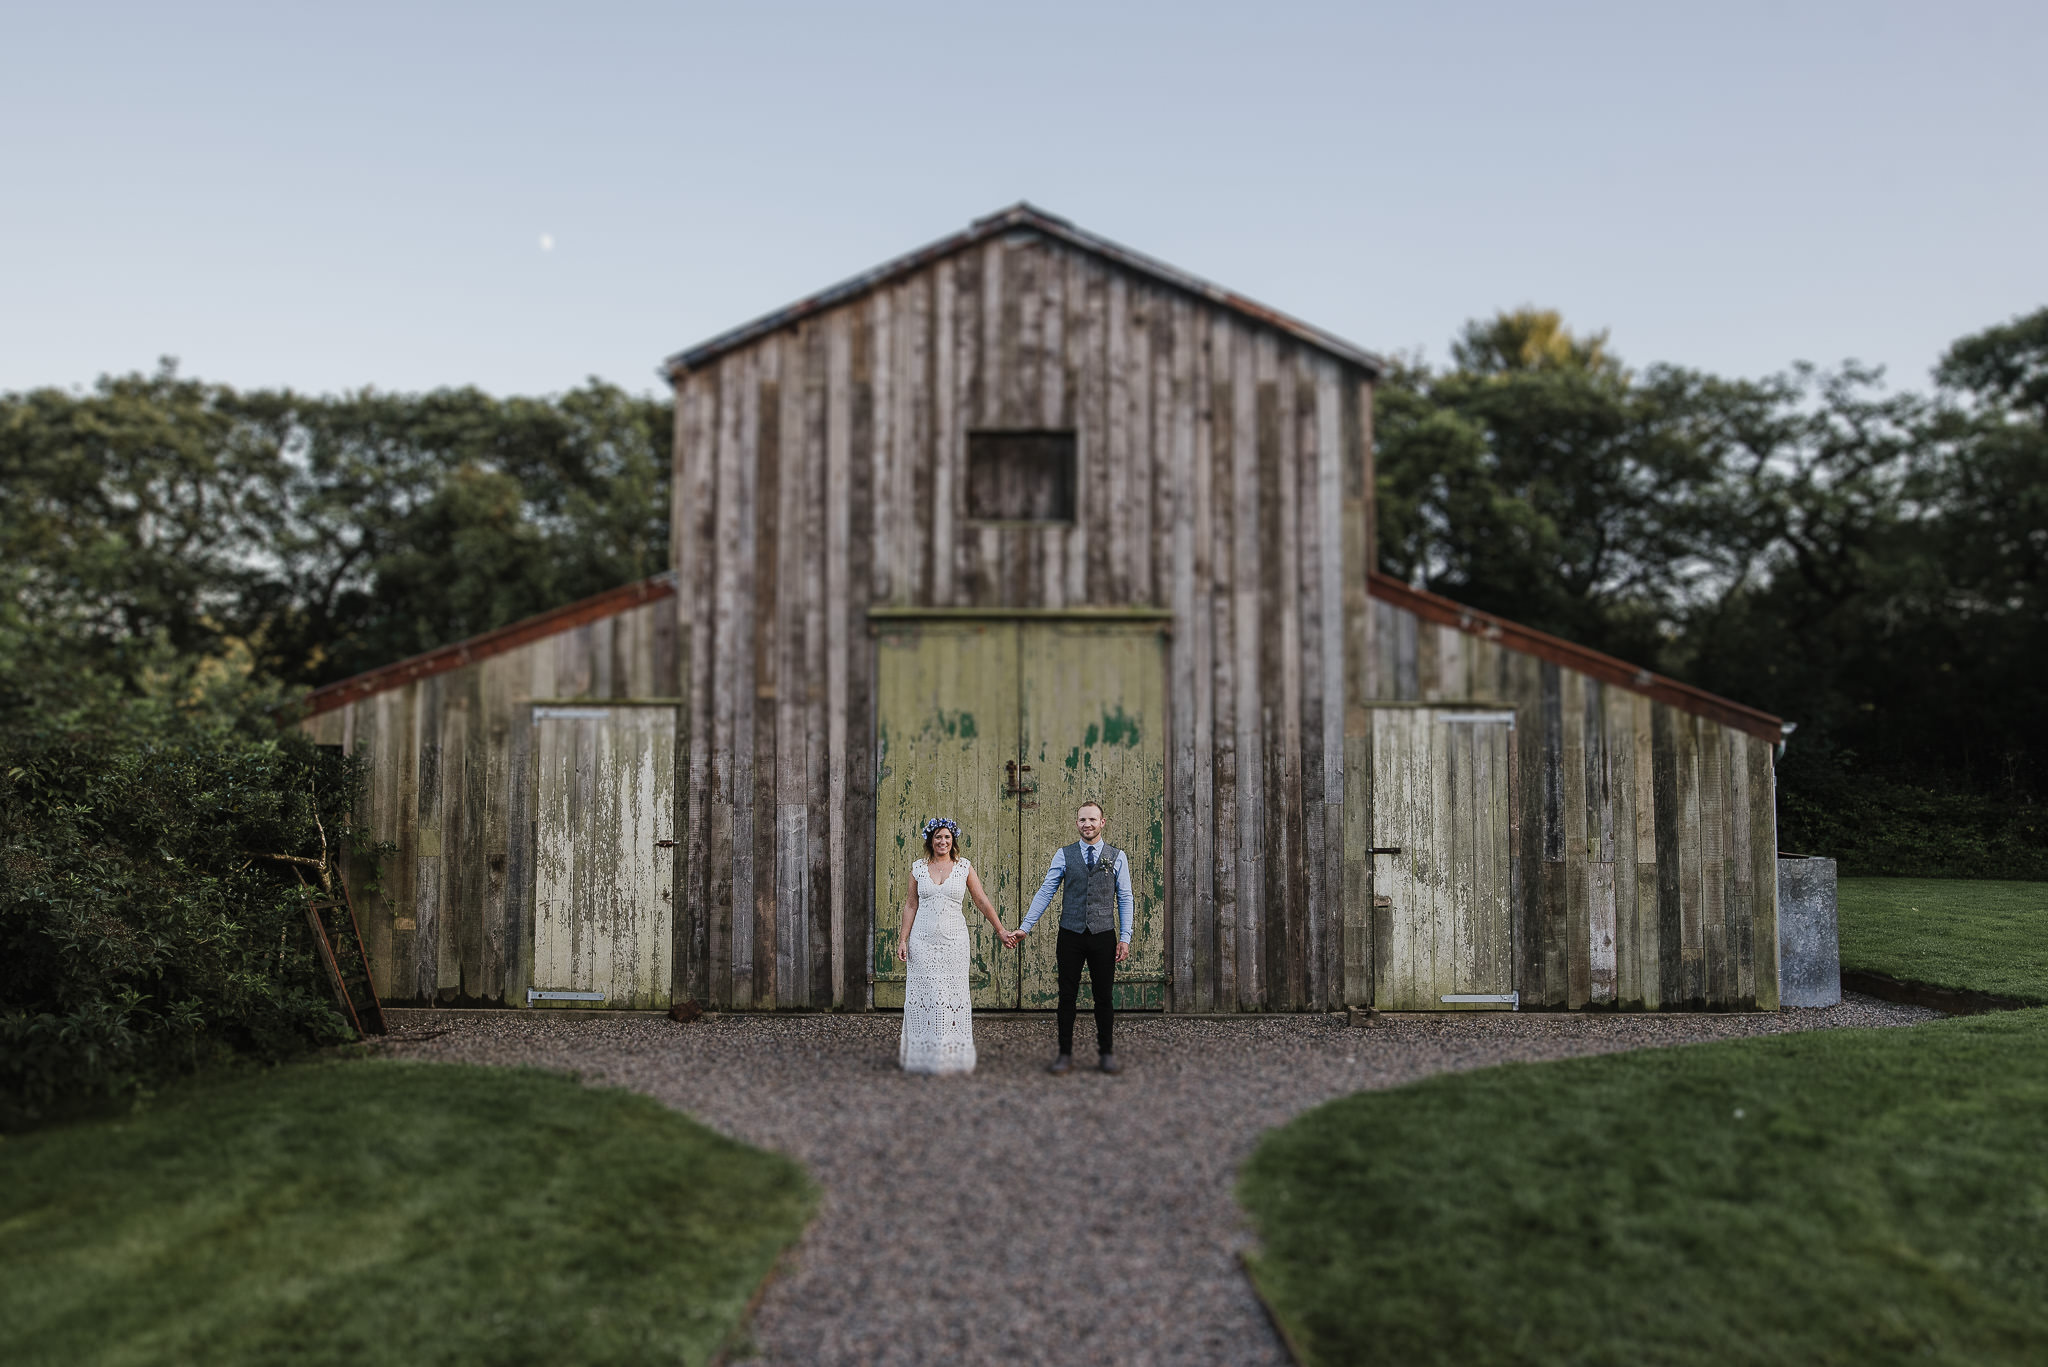 BEST-WEDDING-PHOTOGRAPHER-CORNWALL-2018-4.jpg